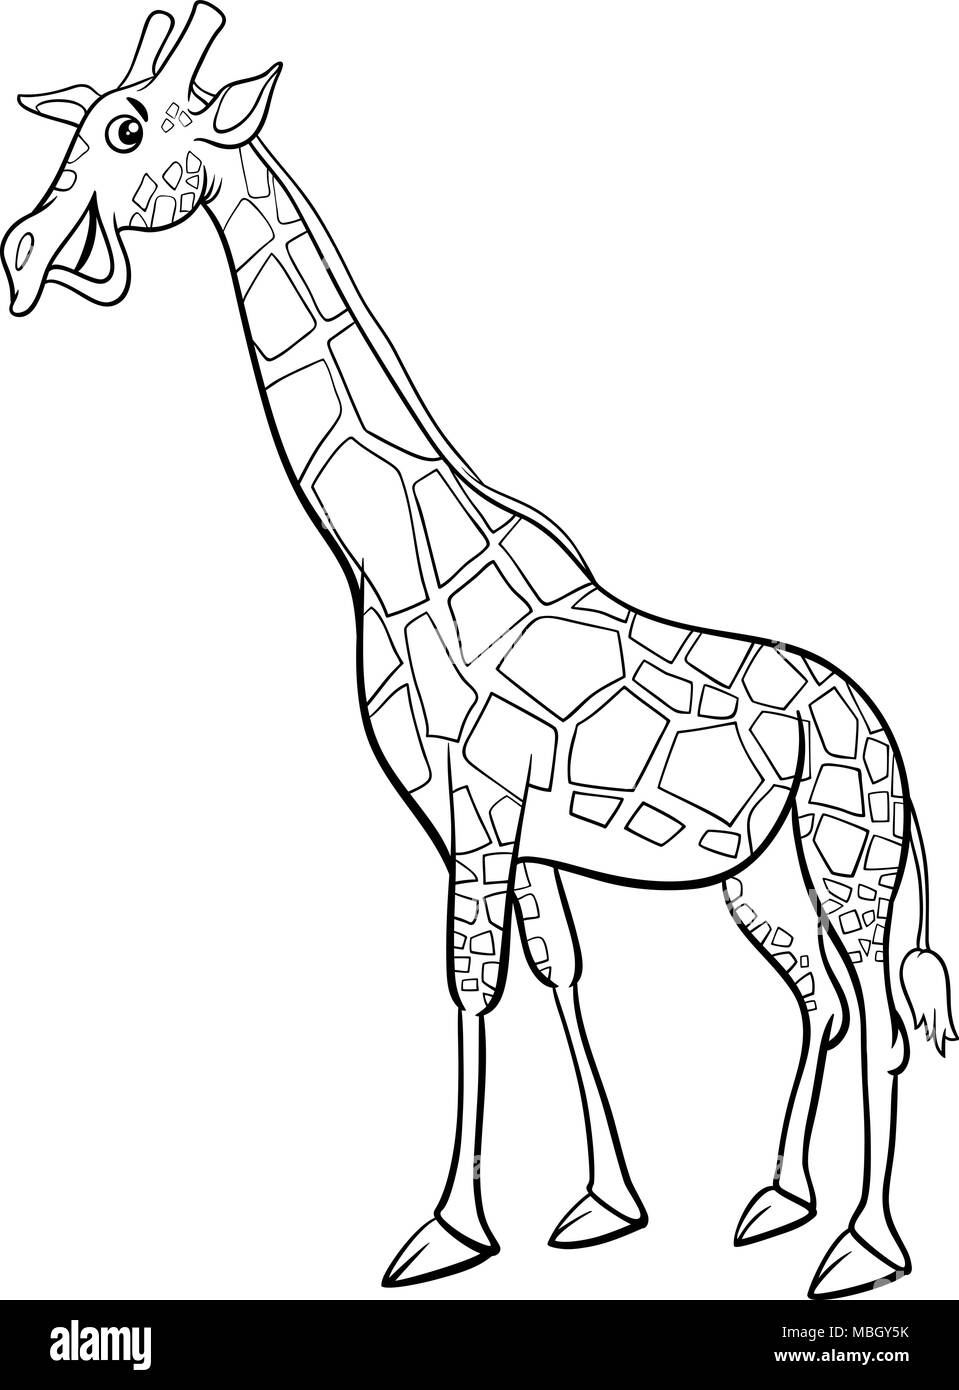 Black and White Cartoon Illustration of Giraffe Wild Animal ...